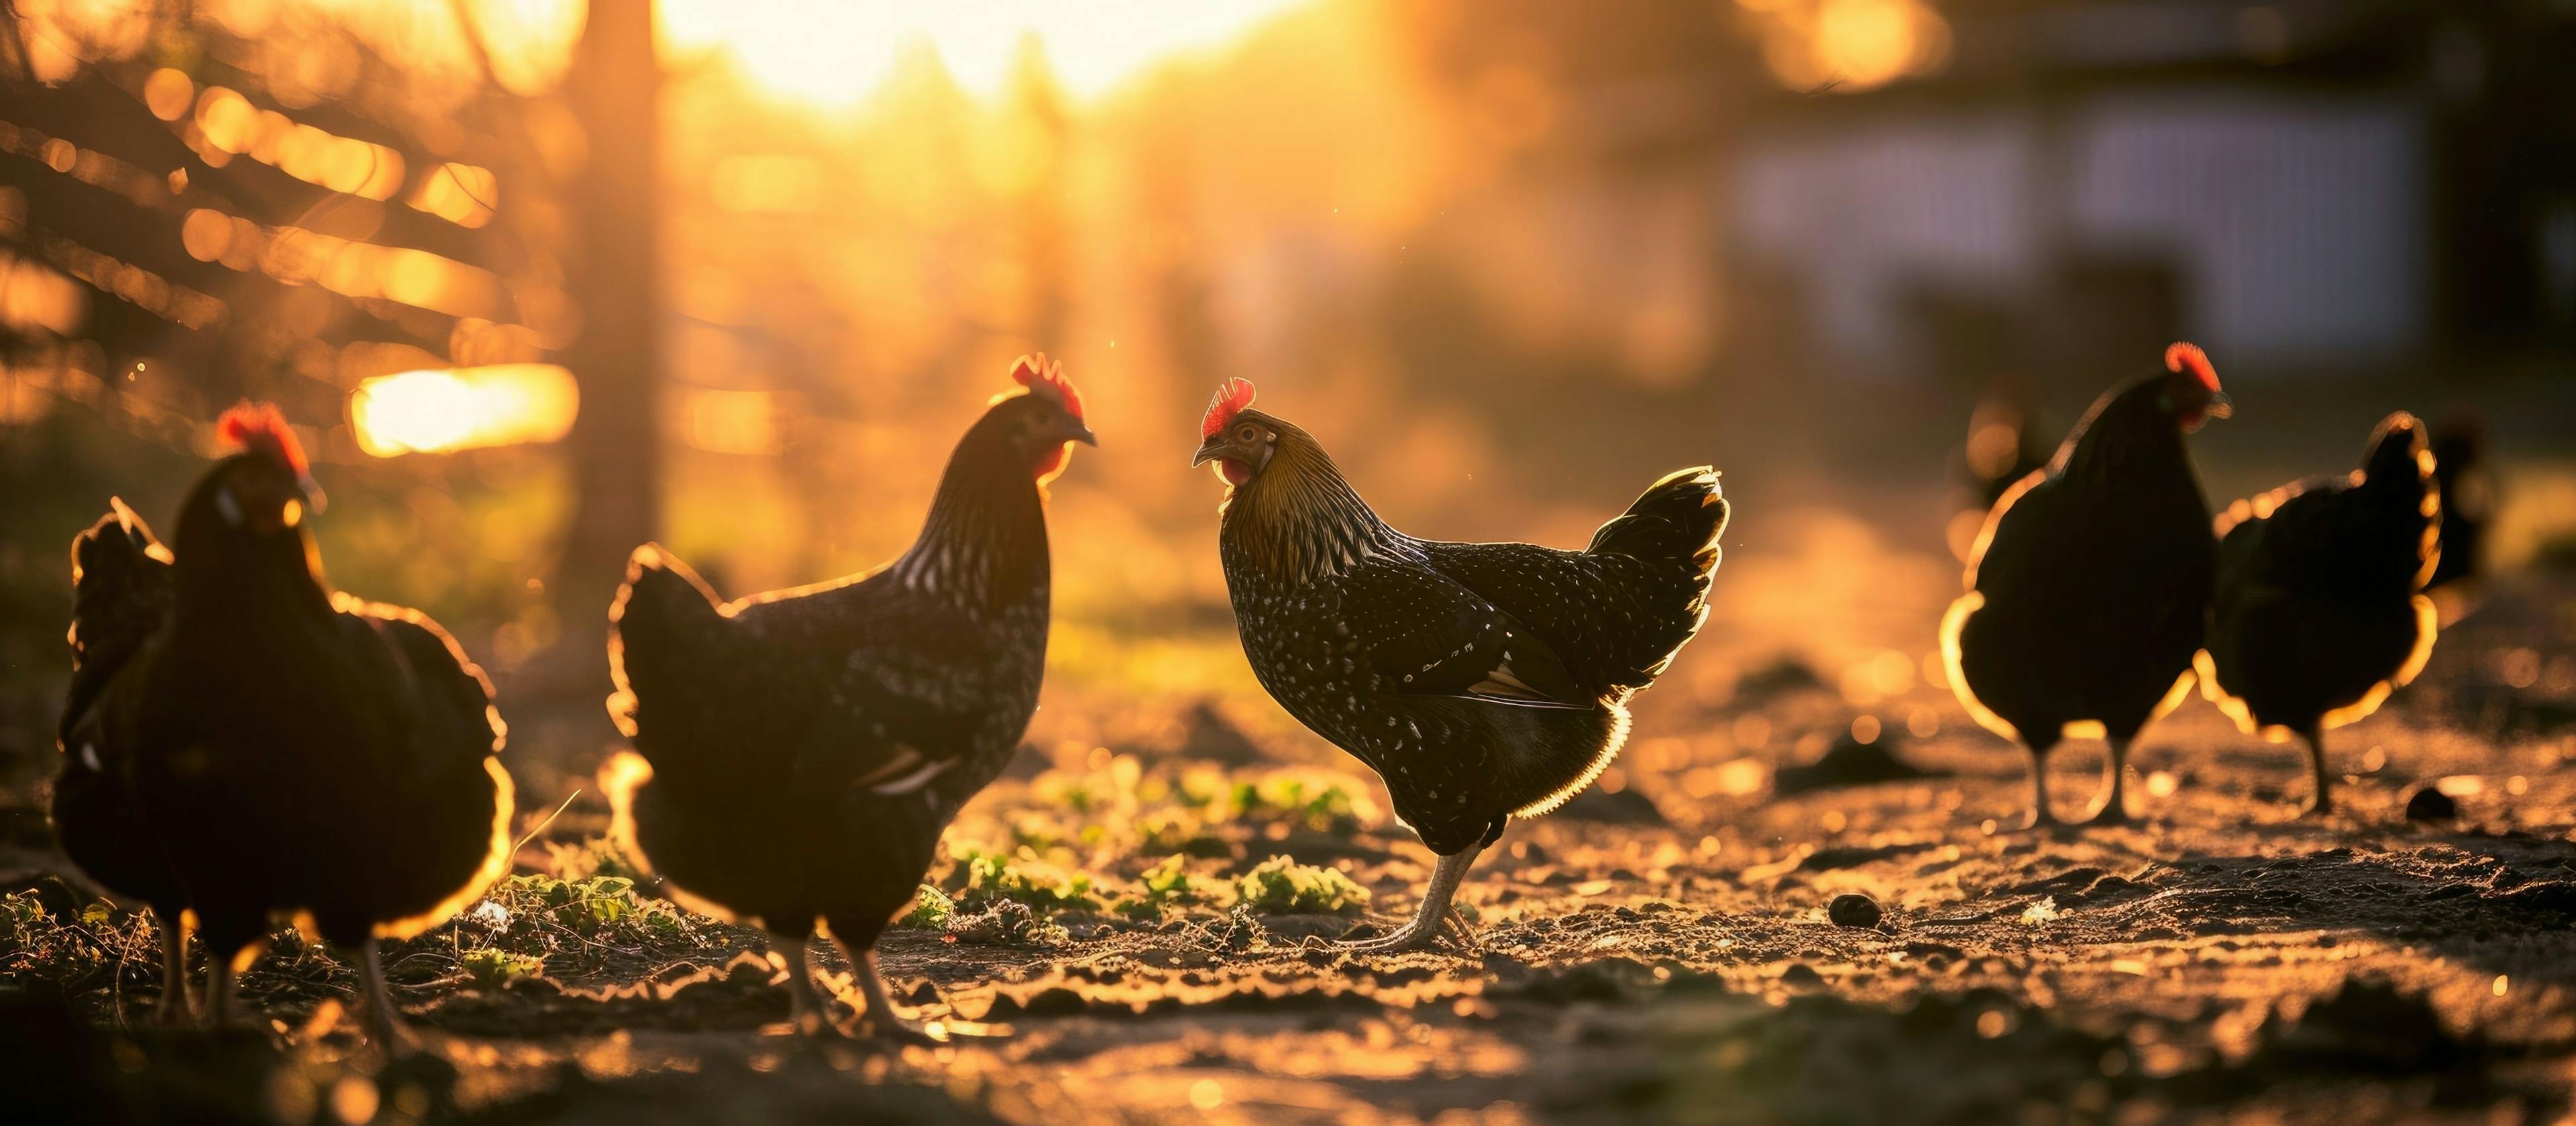 Assessing the risk of avian influenza